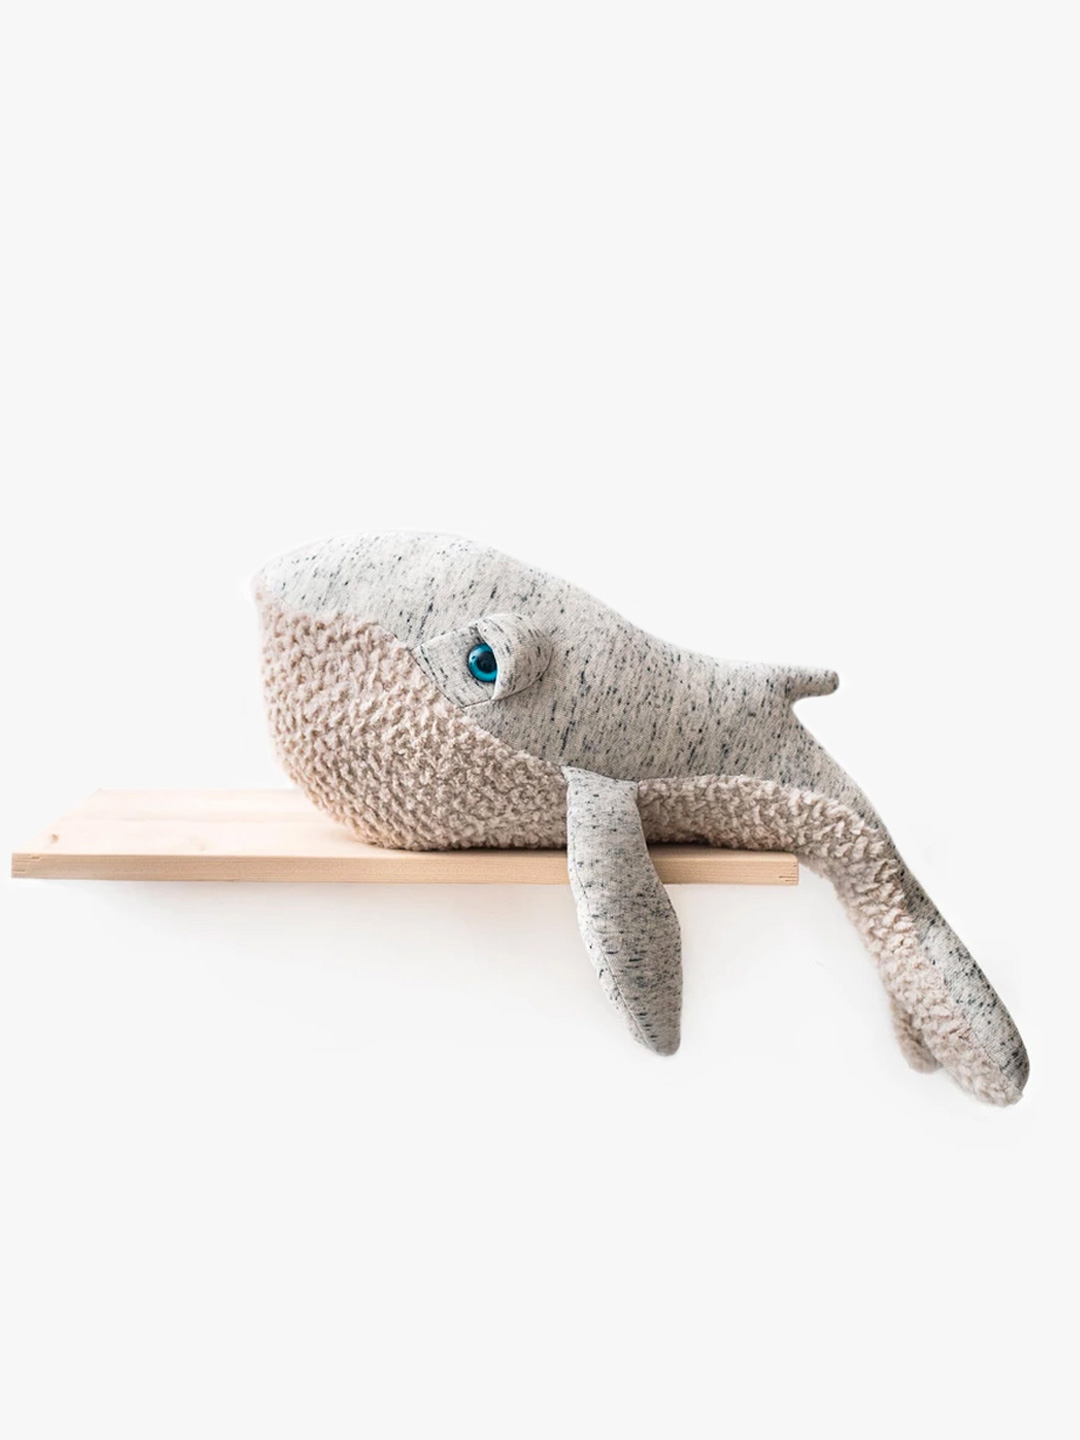 Small Original Whale soft toy